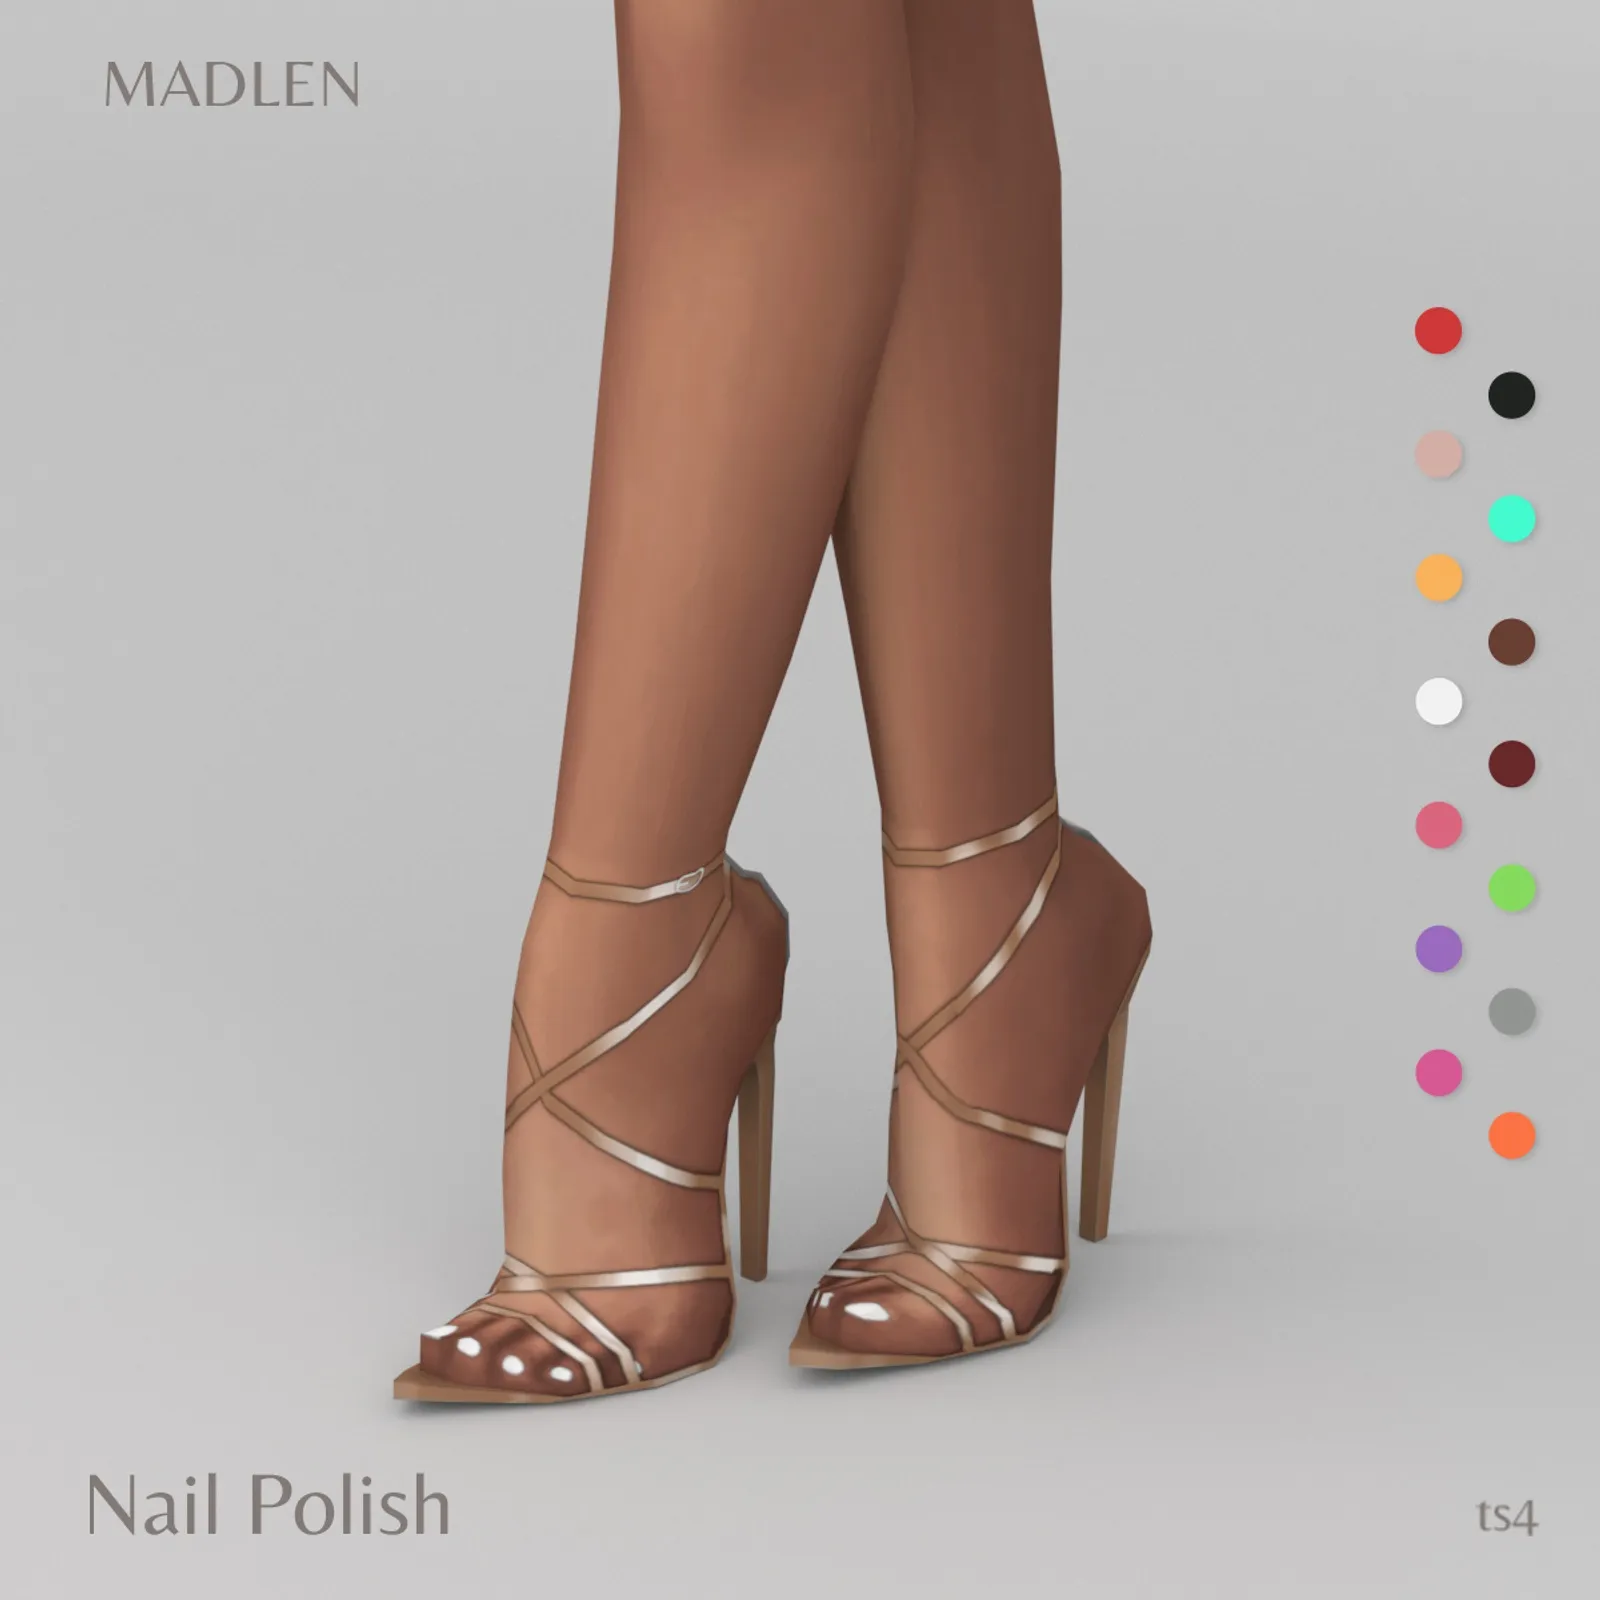 Madlen Nail Polish